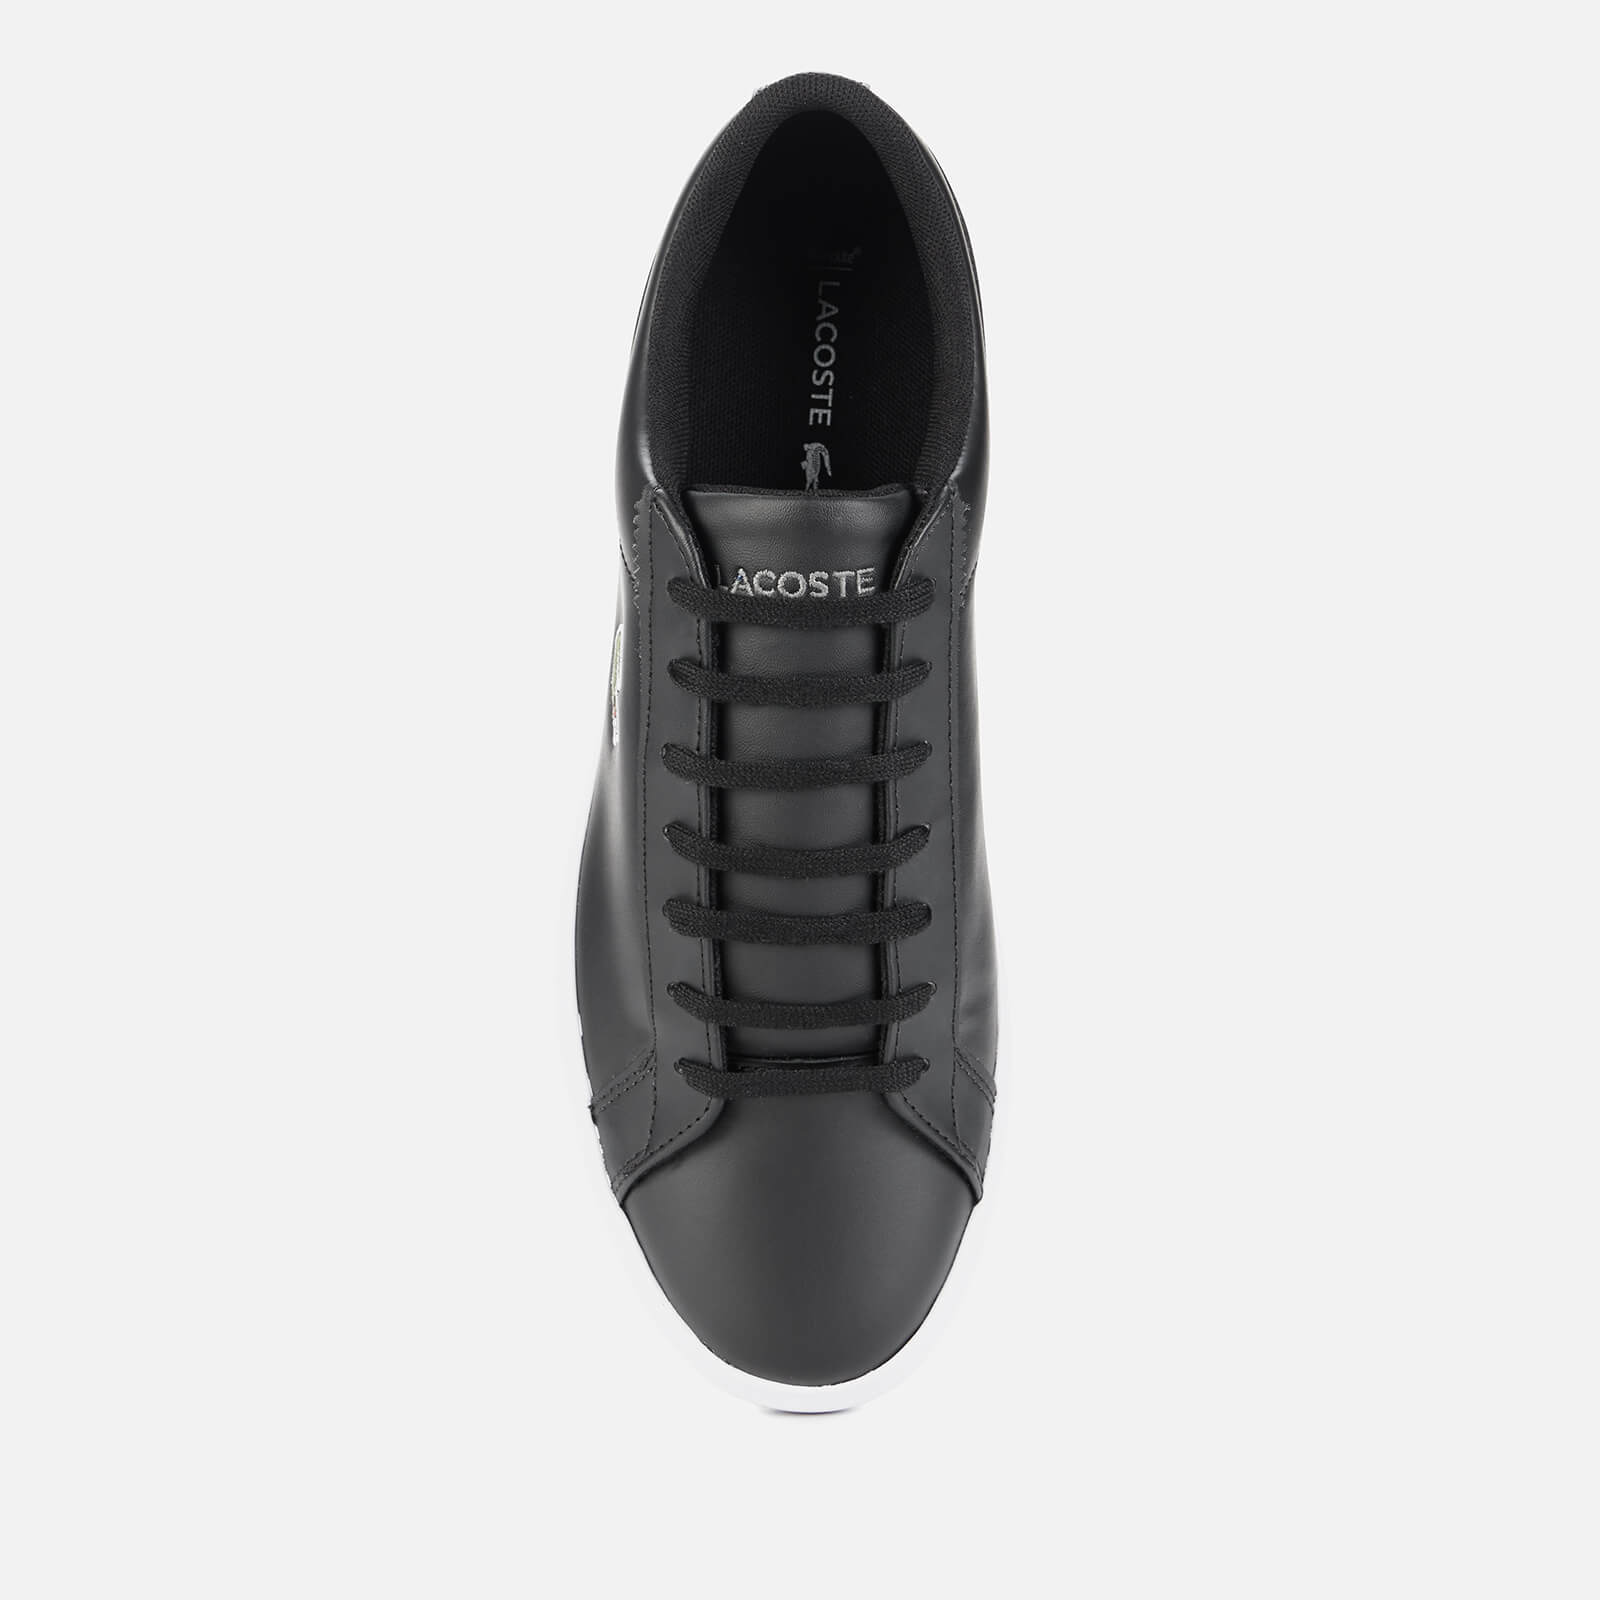 Lacoste Men's Lerond Bl21 1 Leather Vulcanised Trainers - Black/white - Uk 7 741cma0017312 Mens Footwear, Black